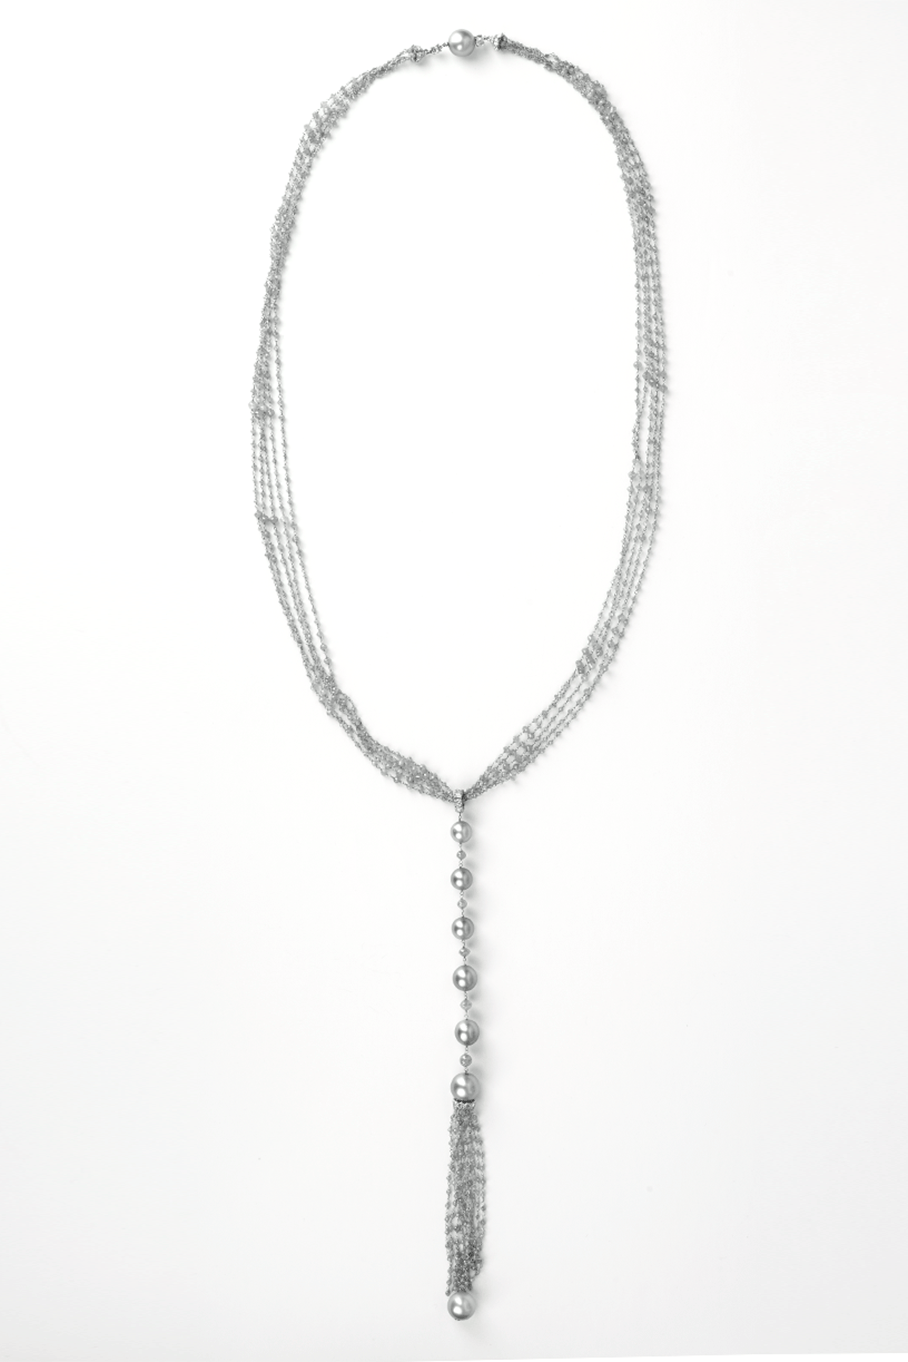 ARUNASHI-Silver South Sea Pearl Wrap Necklace-WHITE GOLD